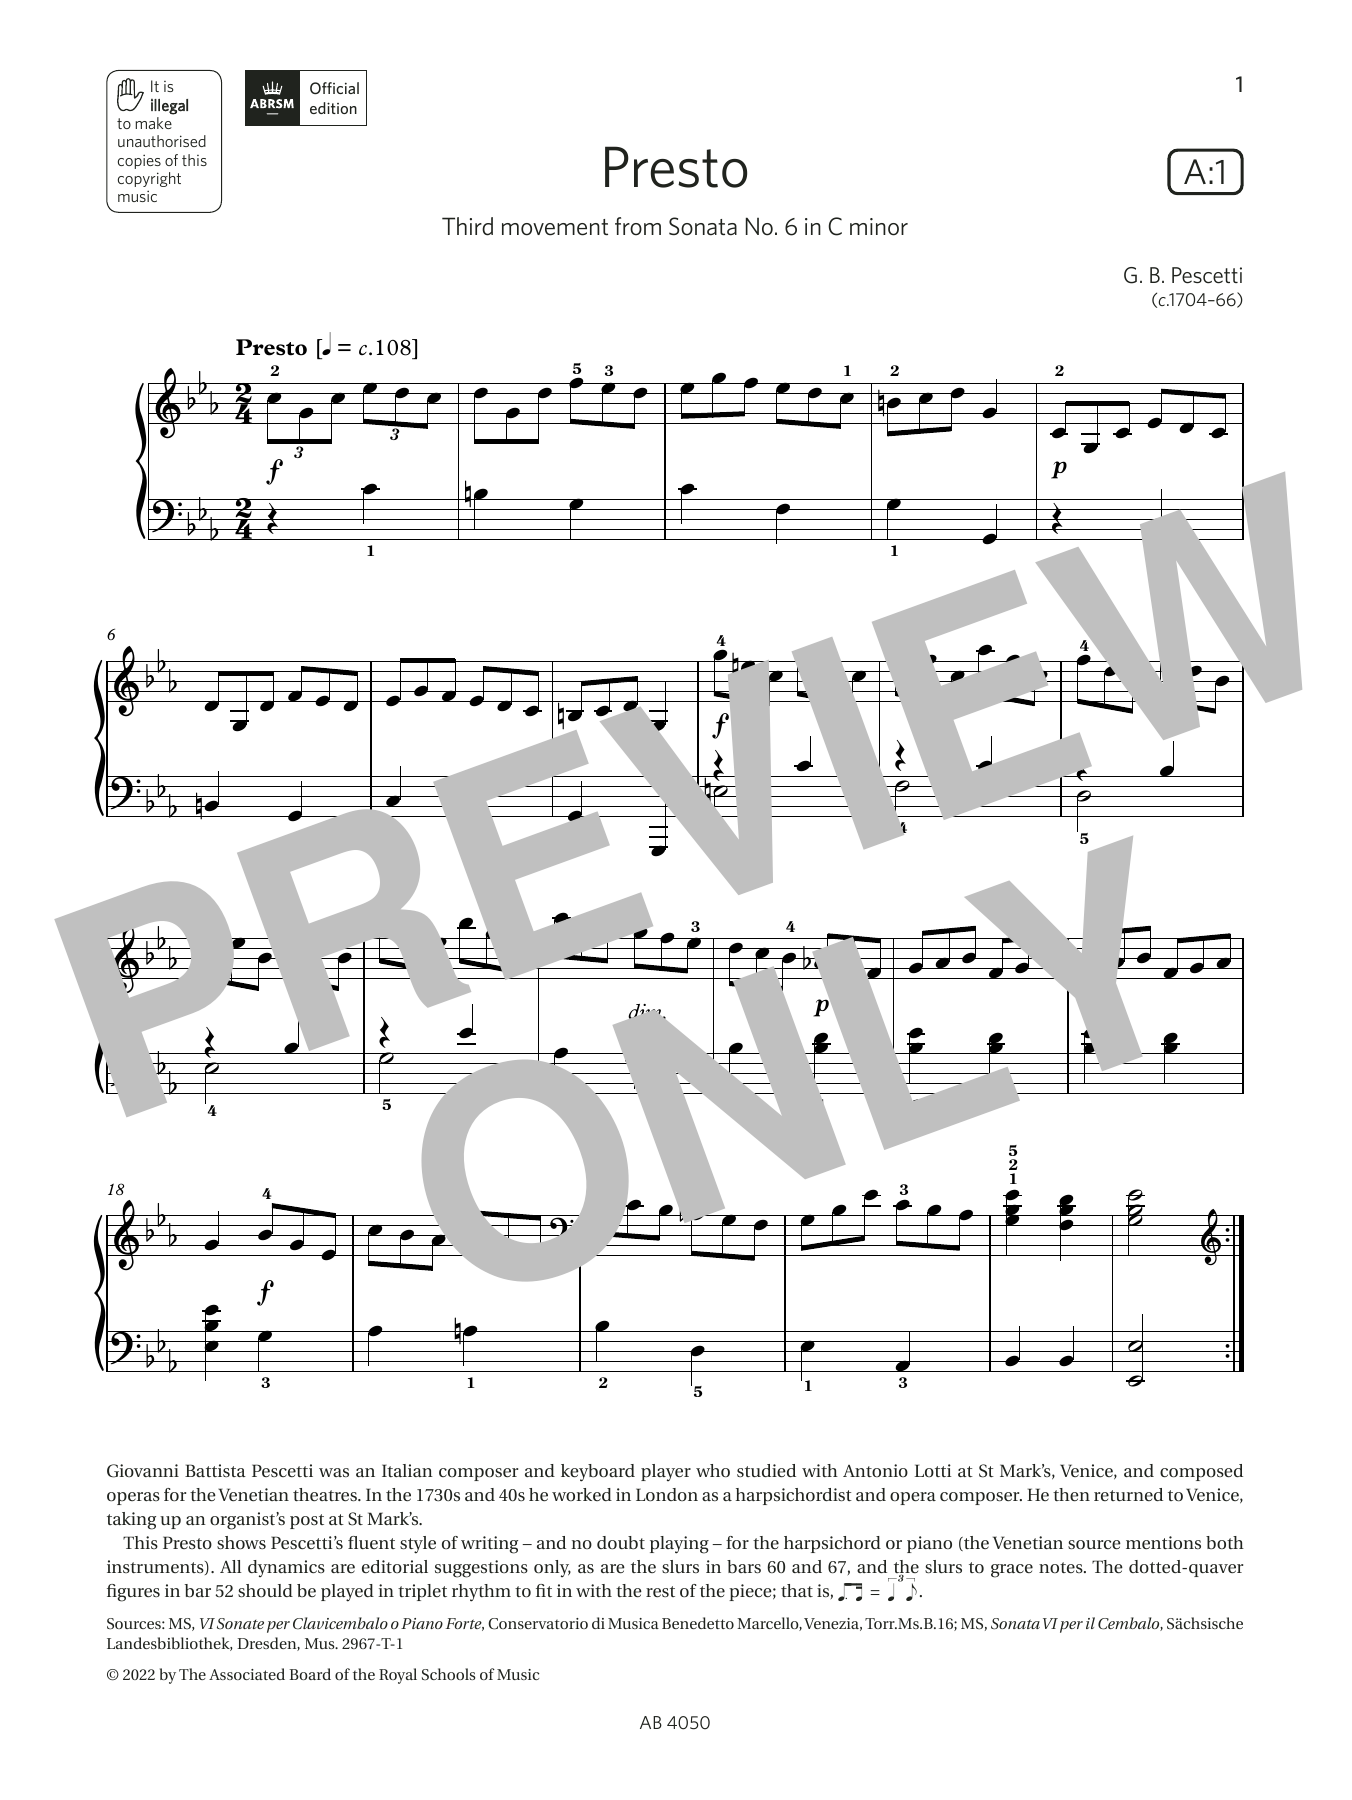 Download G B Pescetti Presto (Grade 4, list A1, from the ABRS Sheet Music